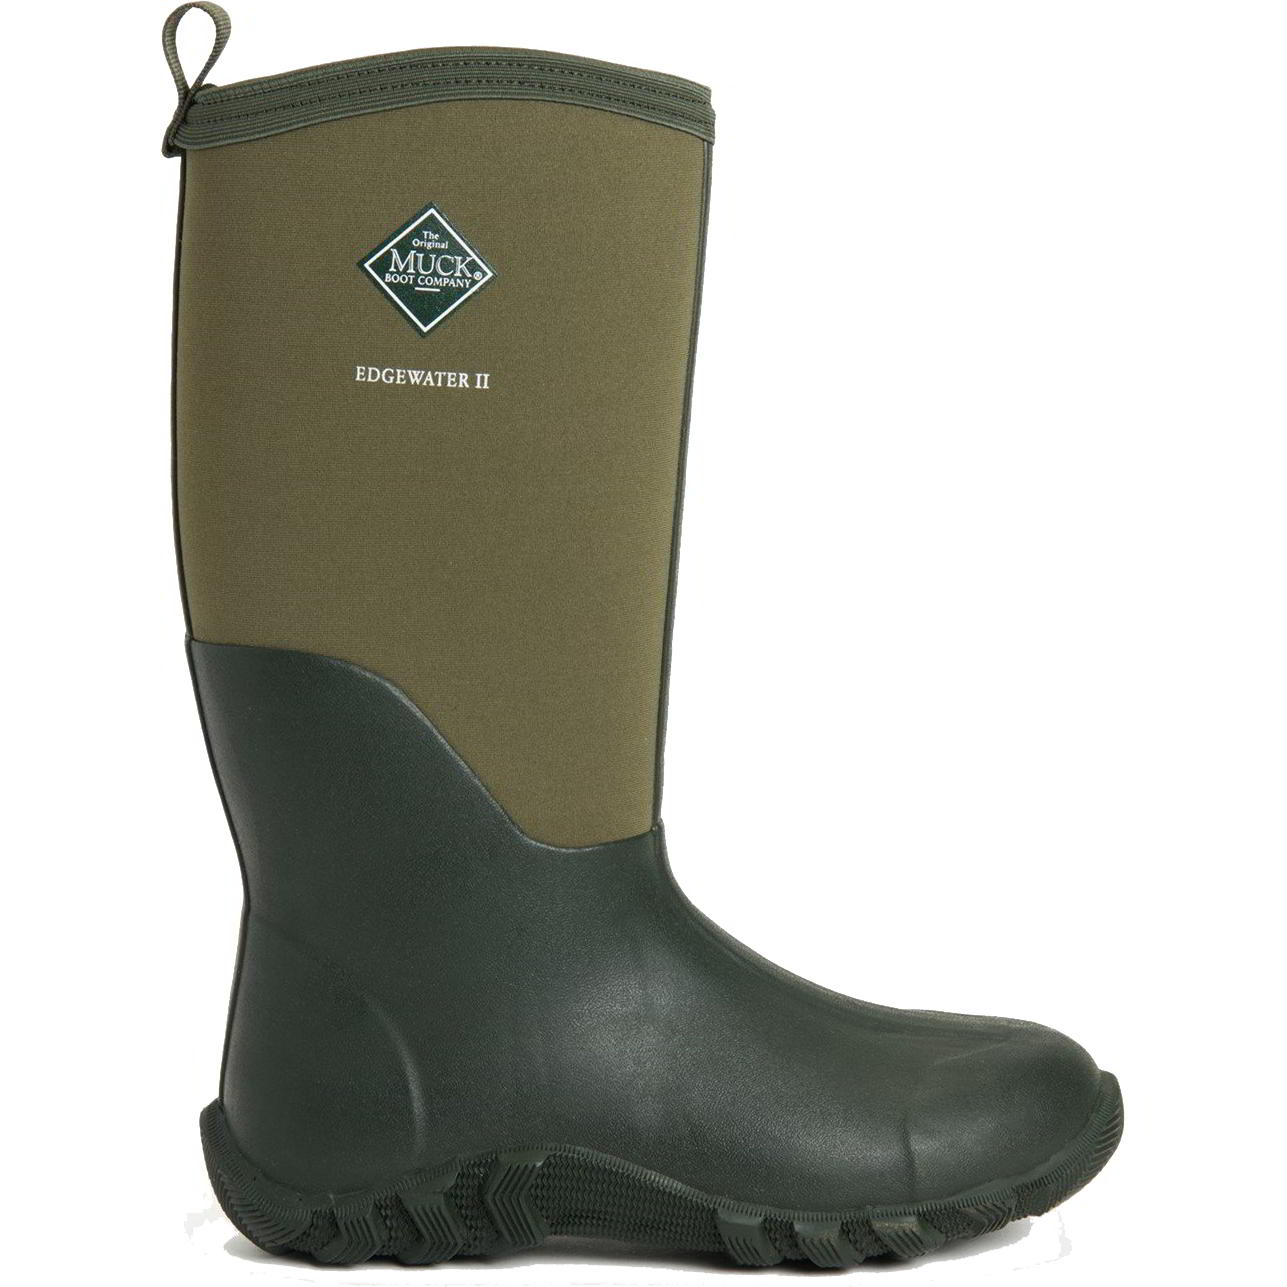 Muck Boots Men's Edgewater II Neoprene Wellies Rain Boots - UK 9